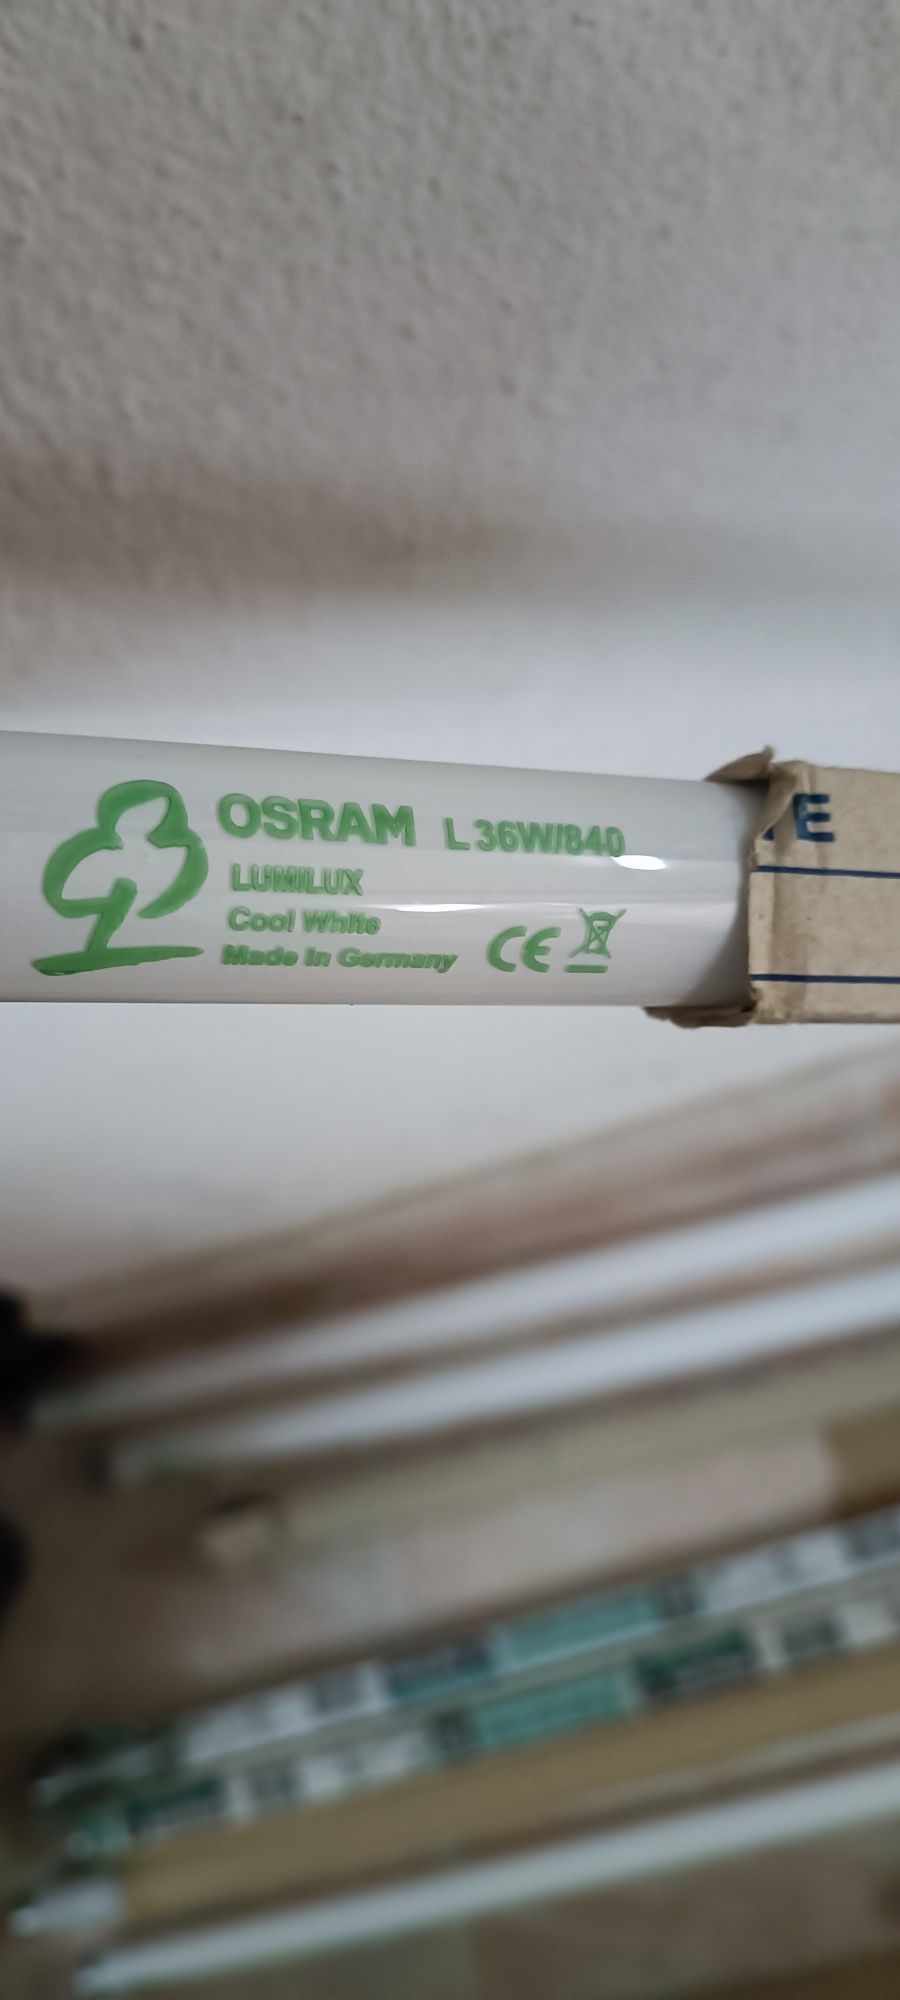 Lâmpada fluorescente OSRAM 36w 830 e 827 de 1.20 metro